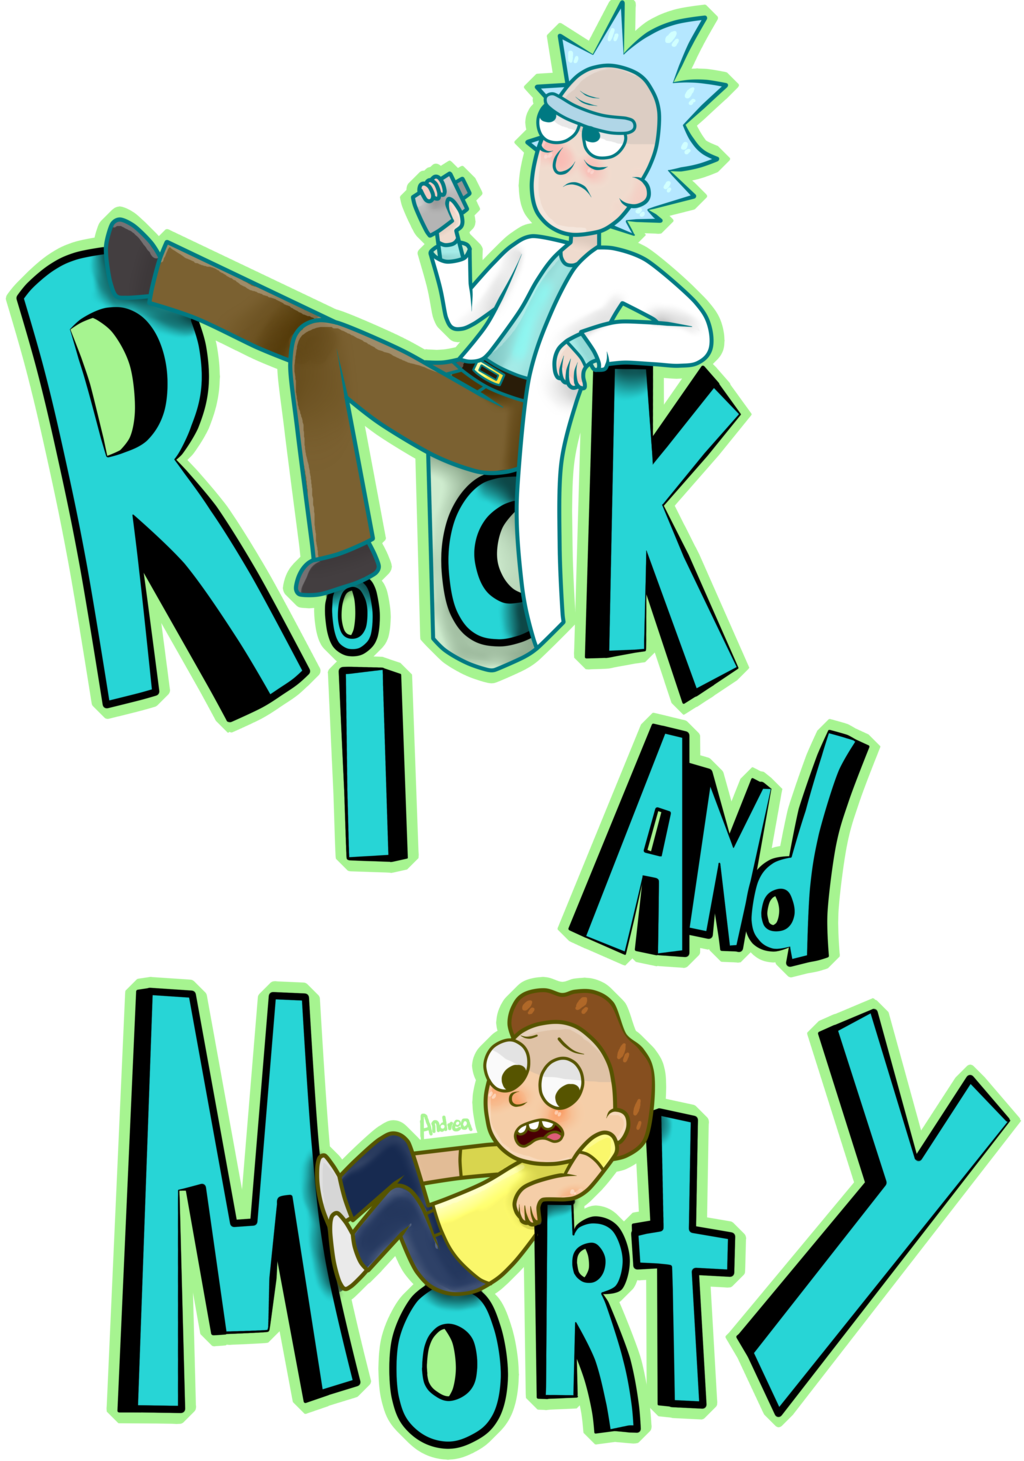 Rick and morty Logos